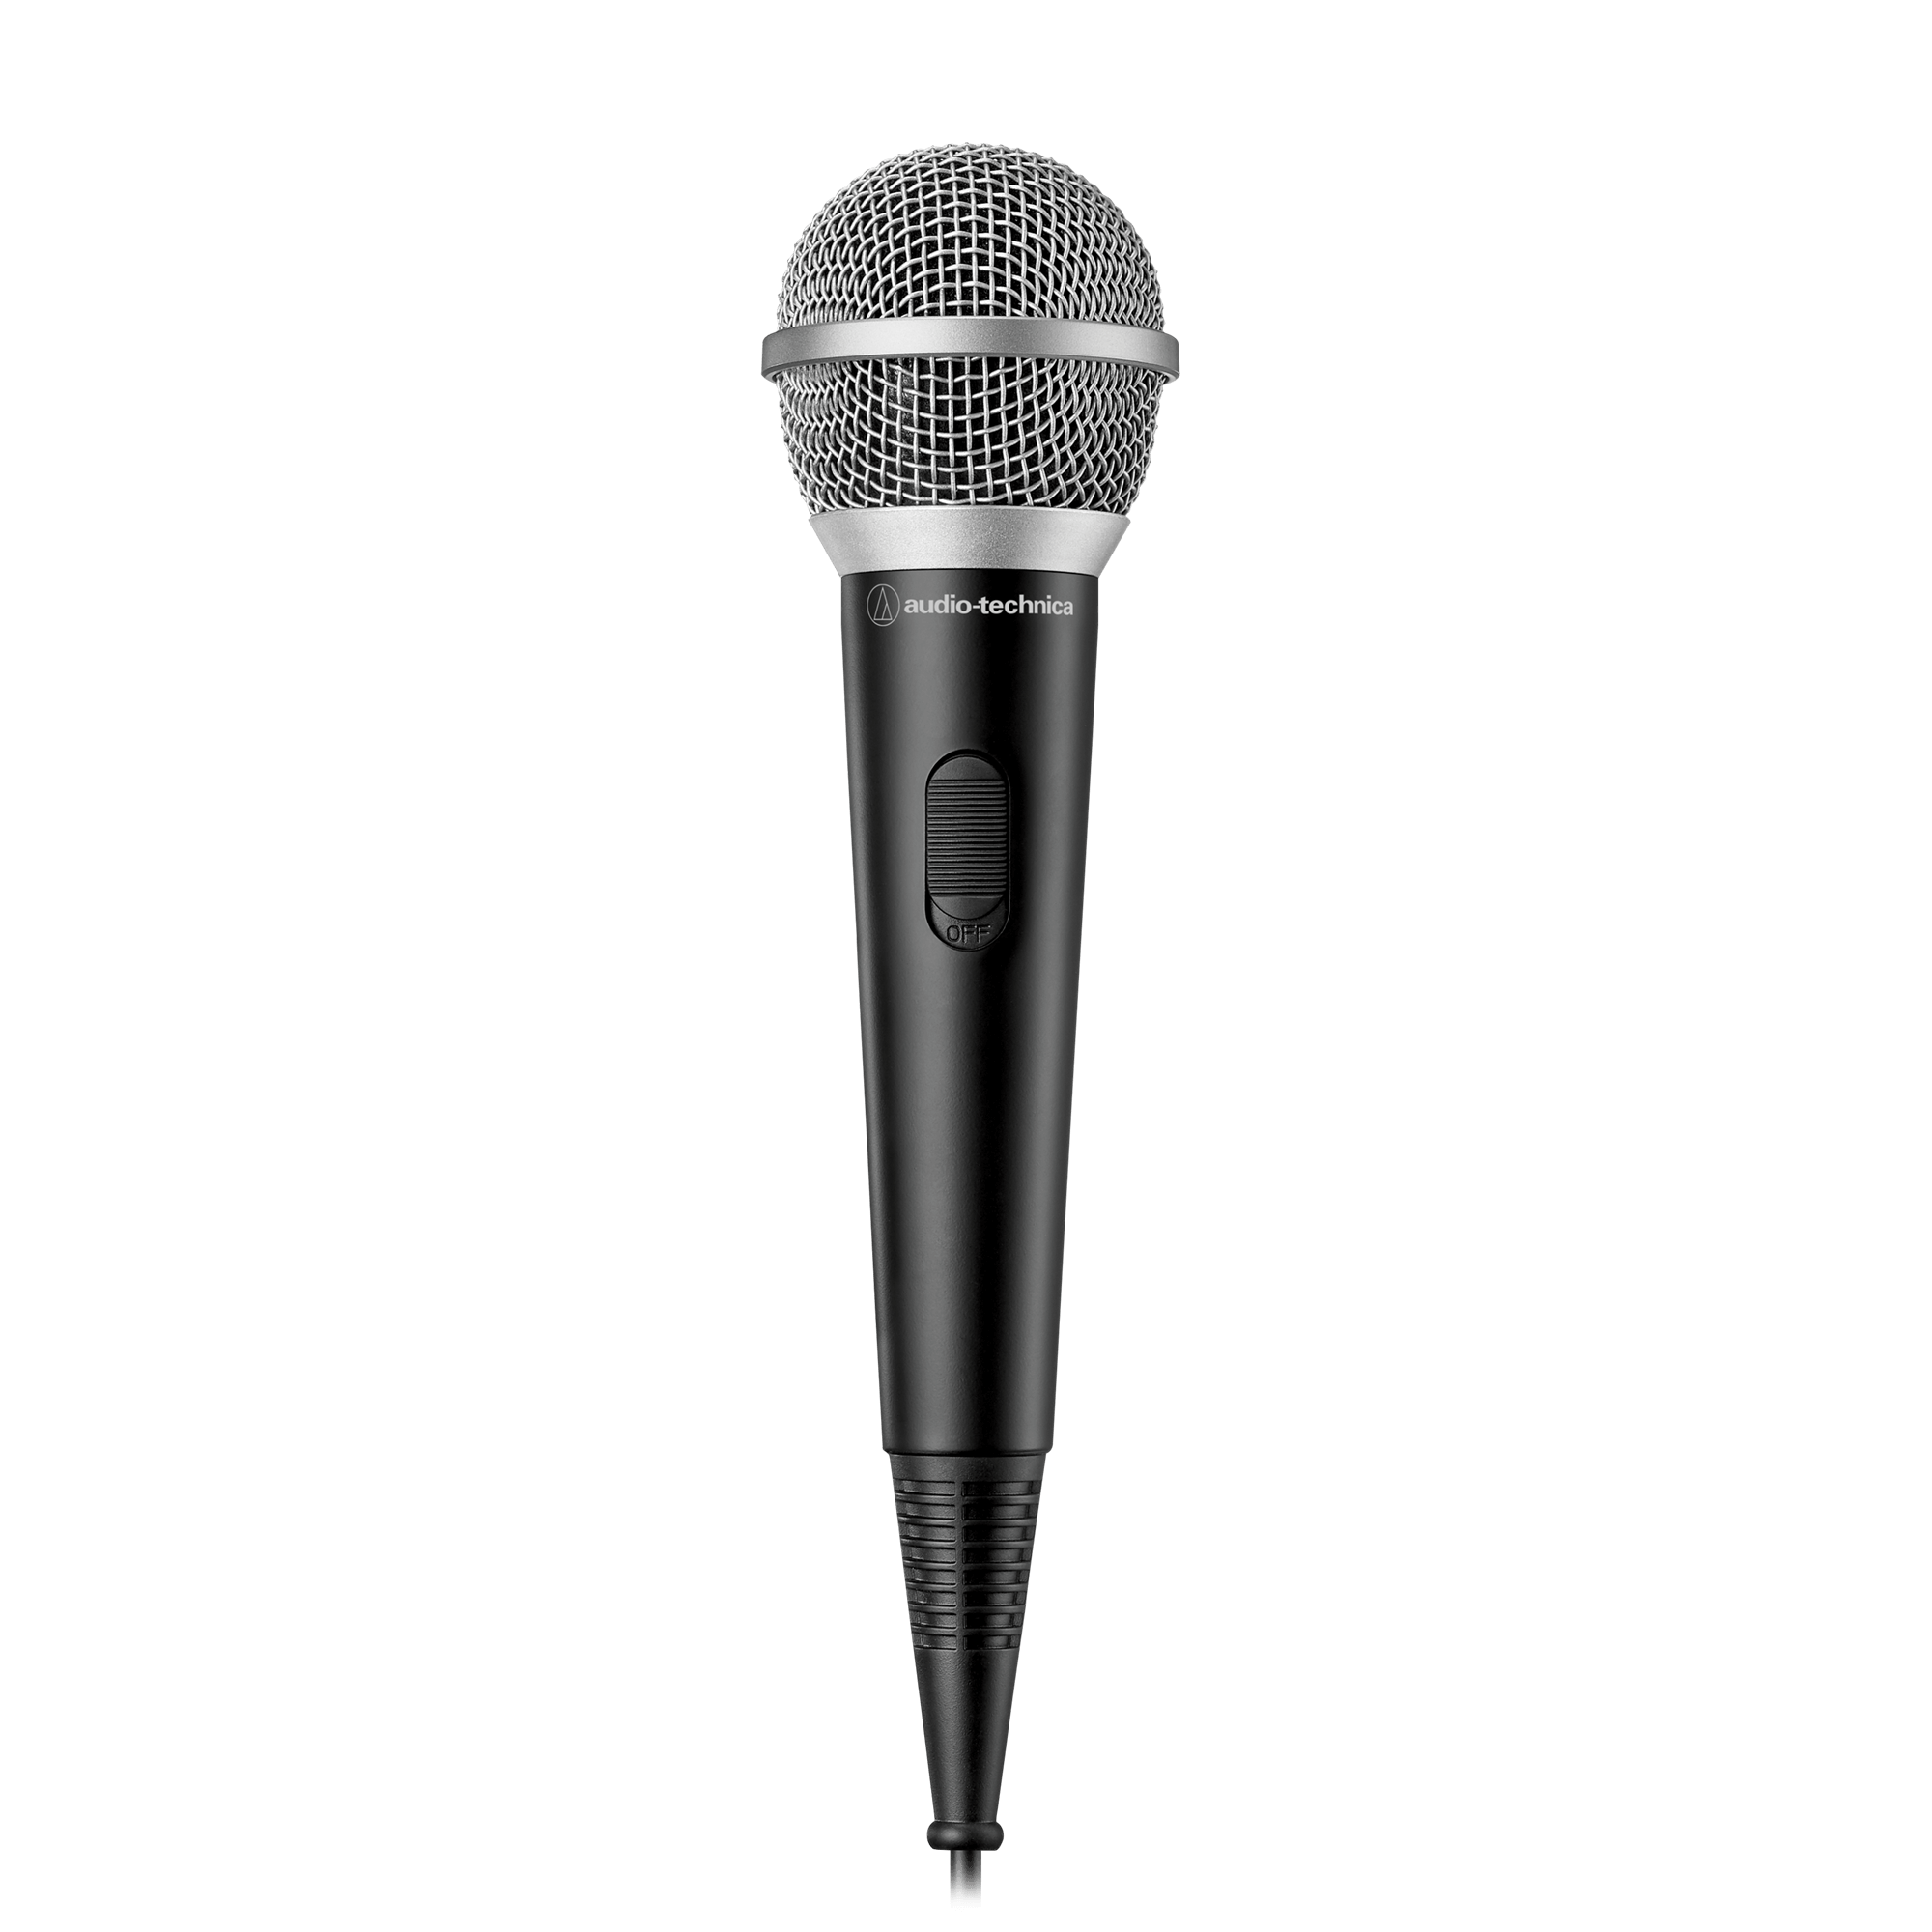 eiland Sandy Verslagen ATR1200x Unidirectional Dynamic Vocal/Instrument Microphone